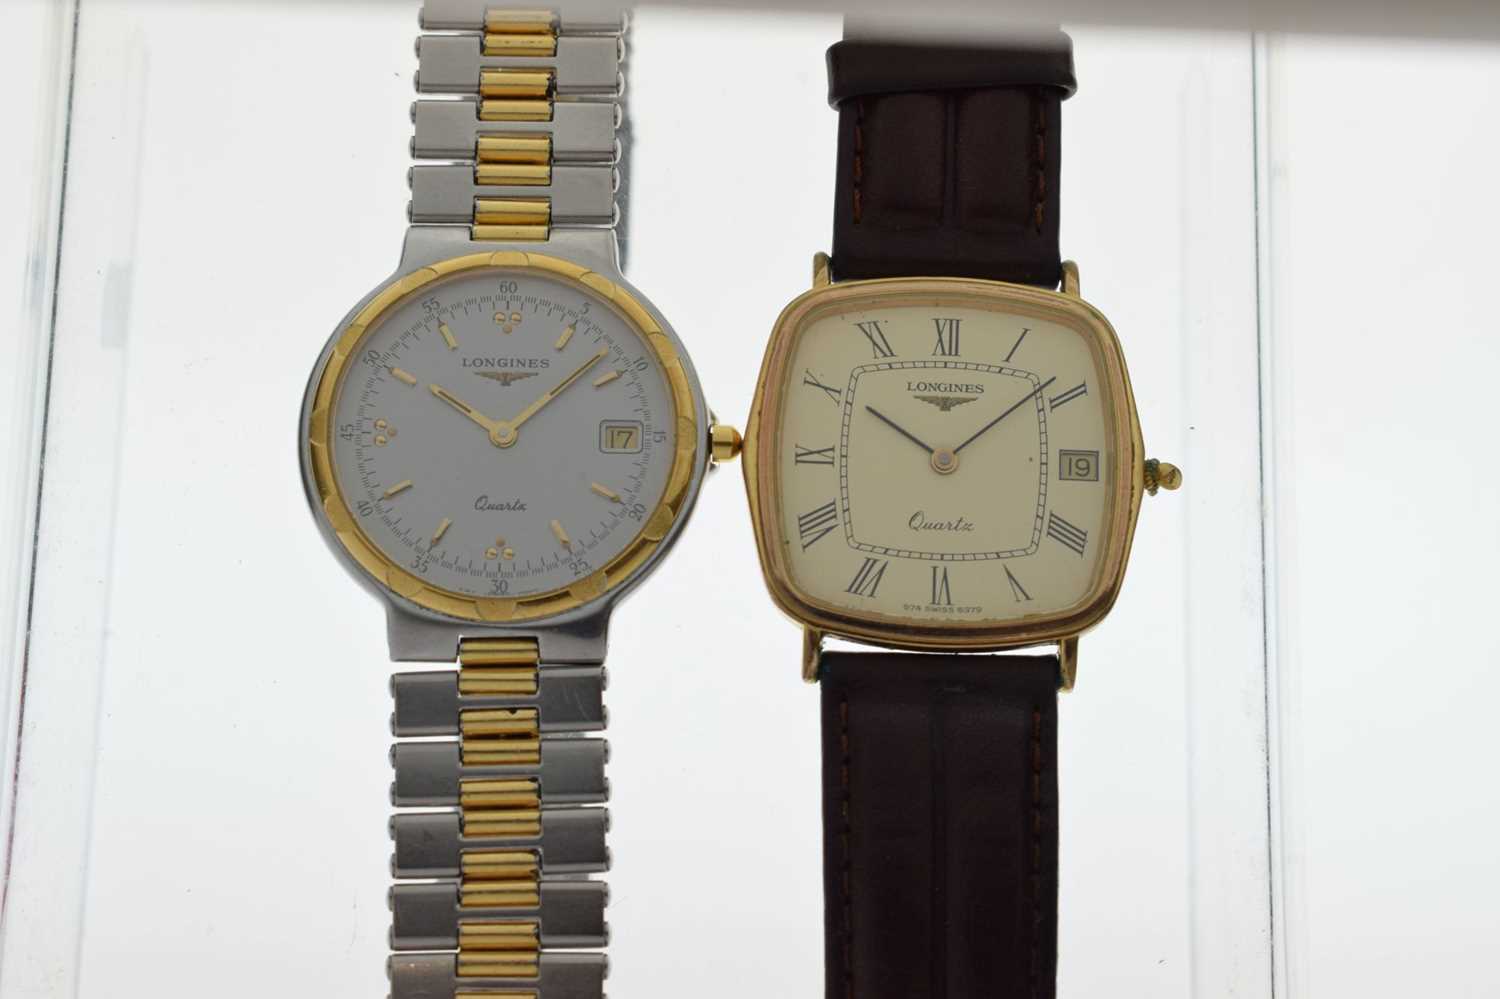 Longines - Two gentleman's quartz watches - Image 8 of 8